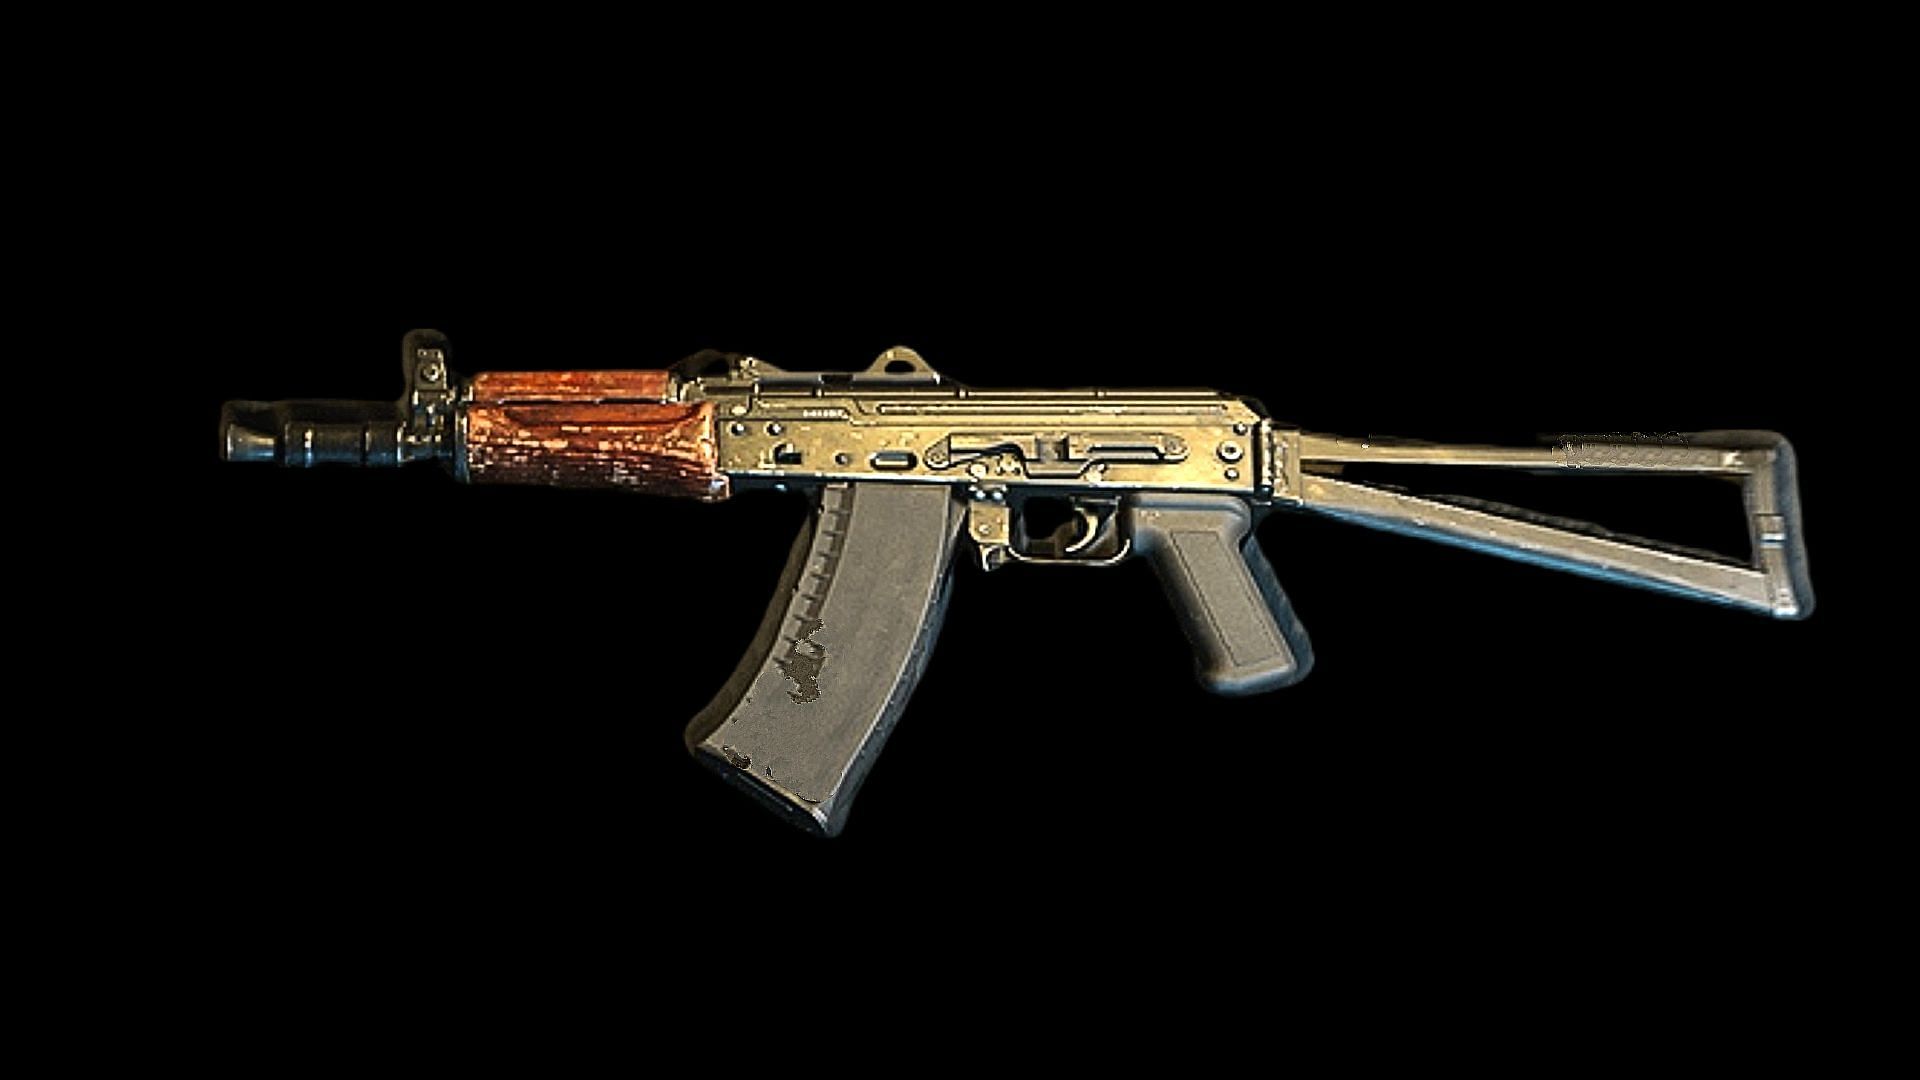 The Kastov-74u assault rifle in Modern Warfare 2 (Image via Activision)